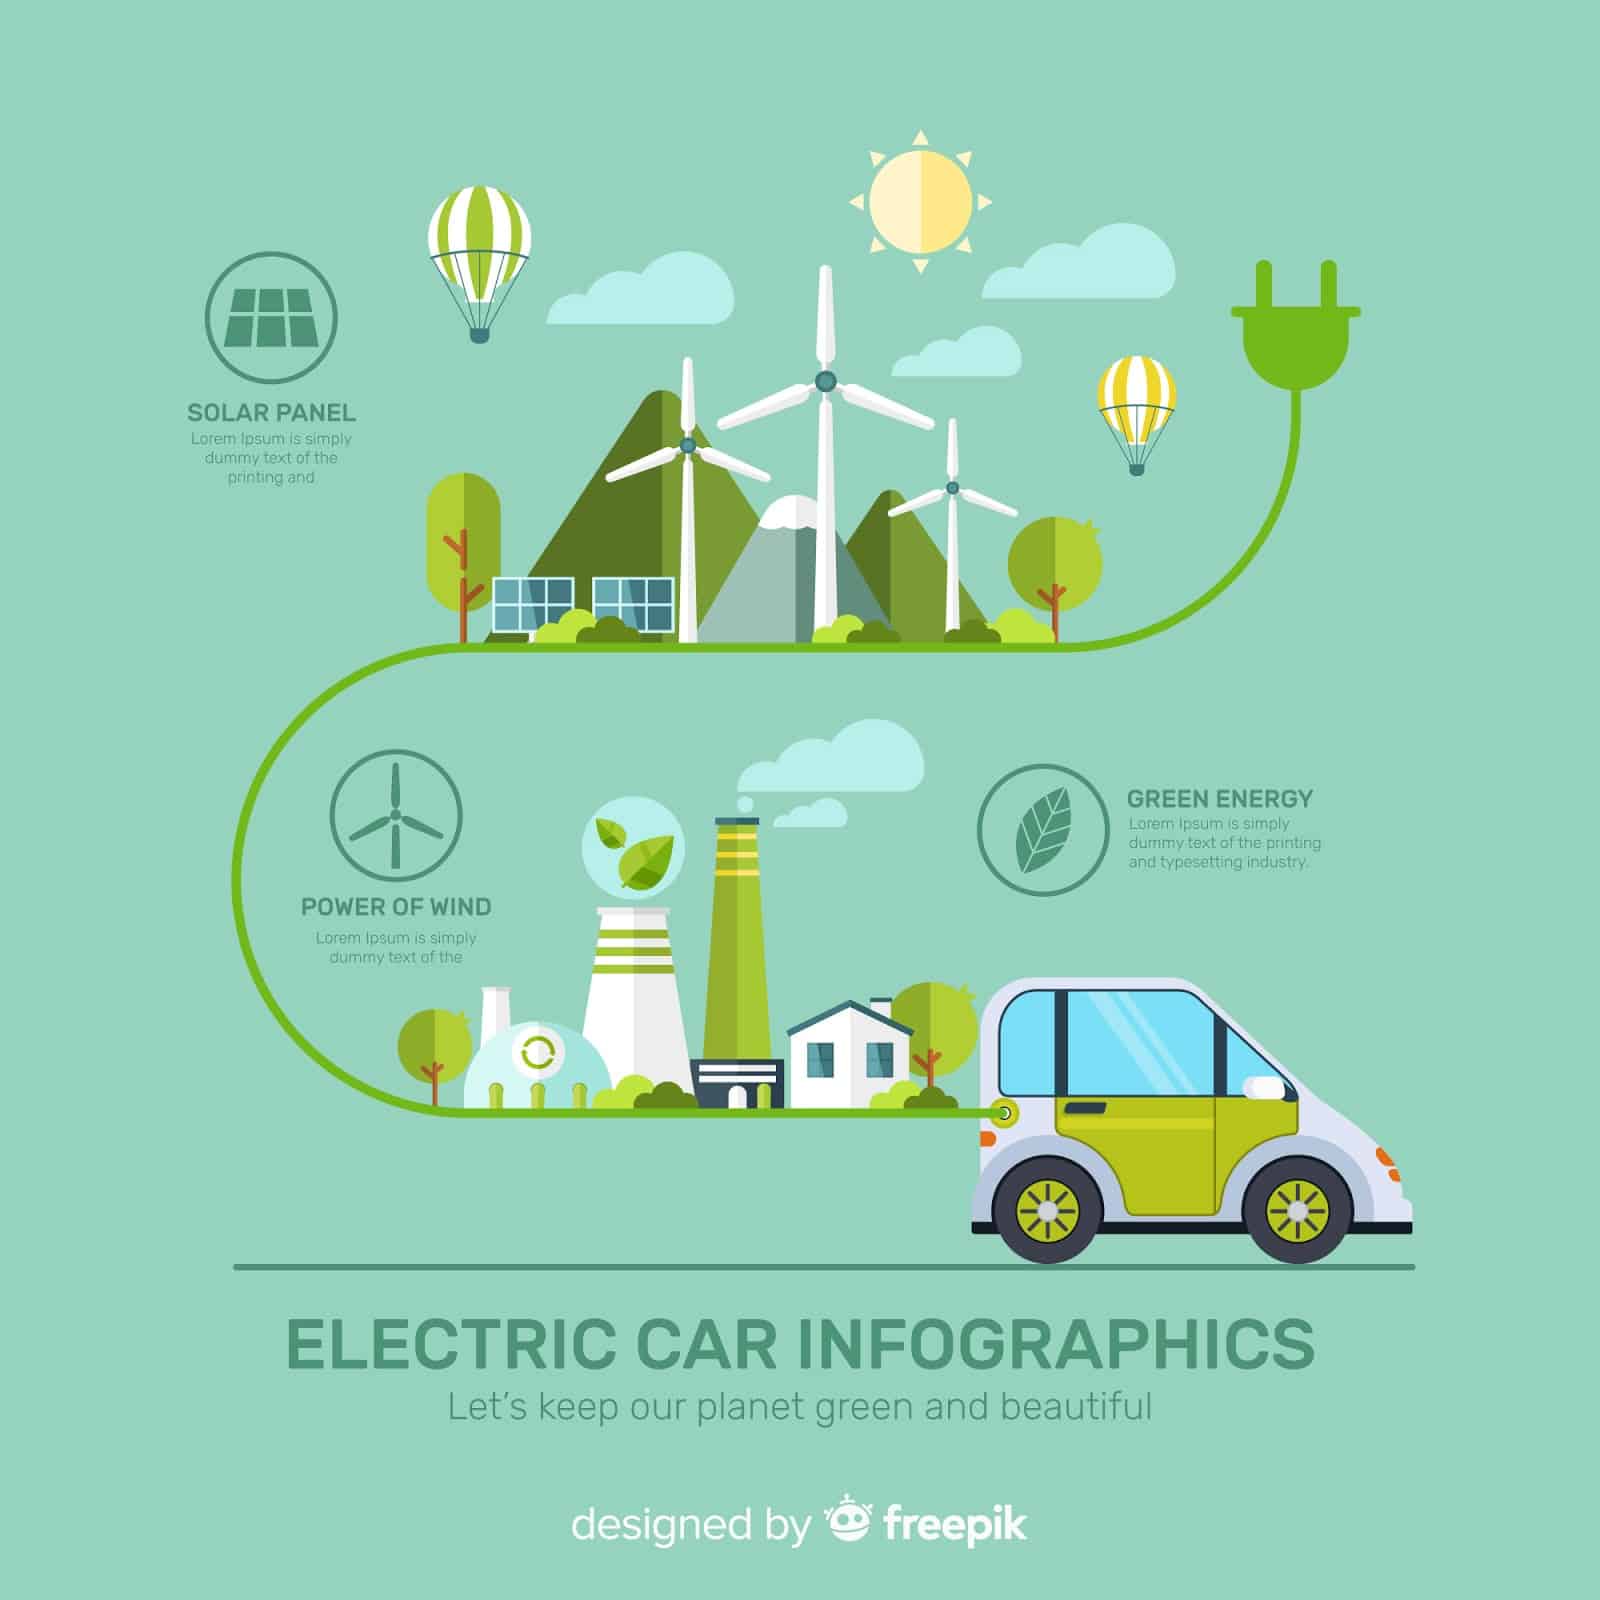 Electric Vehicles
